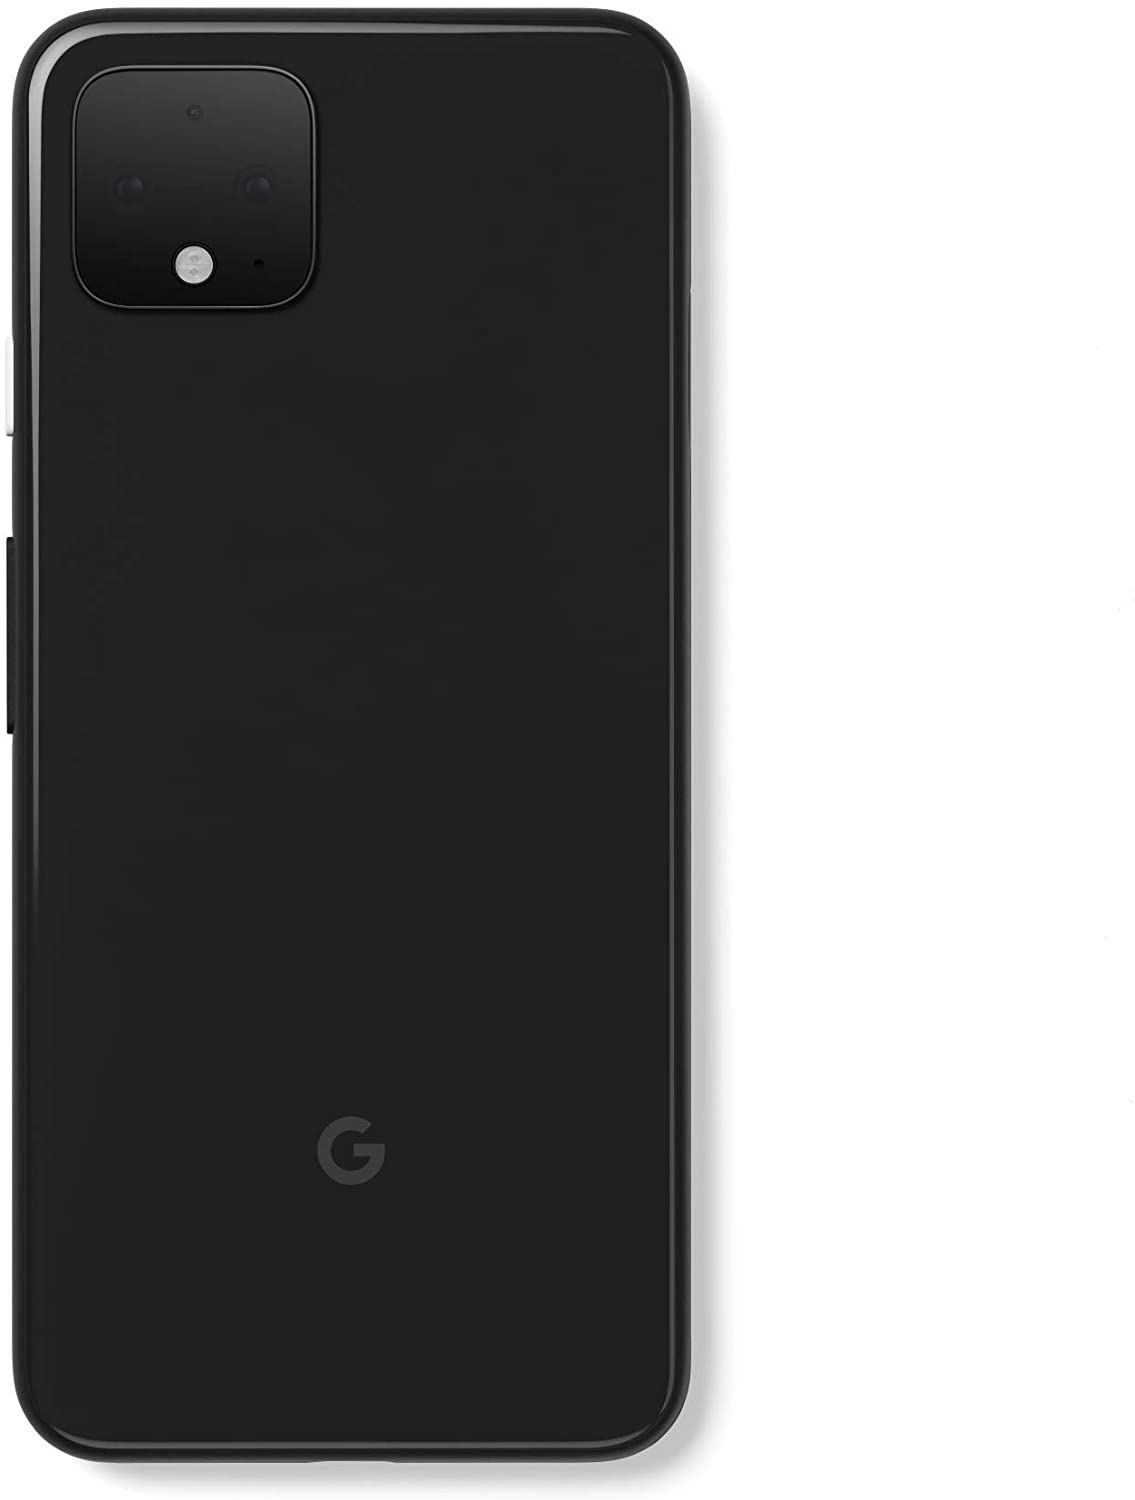 Google Pixel 4 64GB SIM Free (US Model) Just Black - Japan